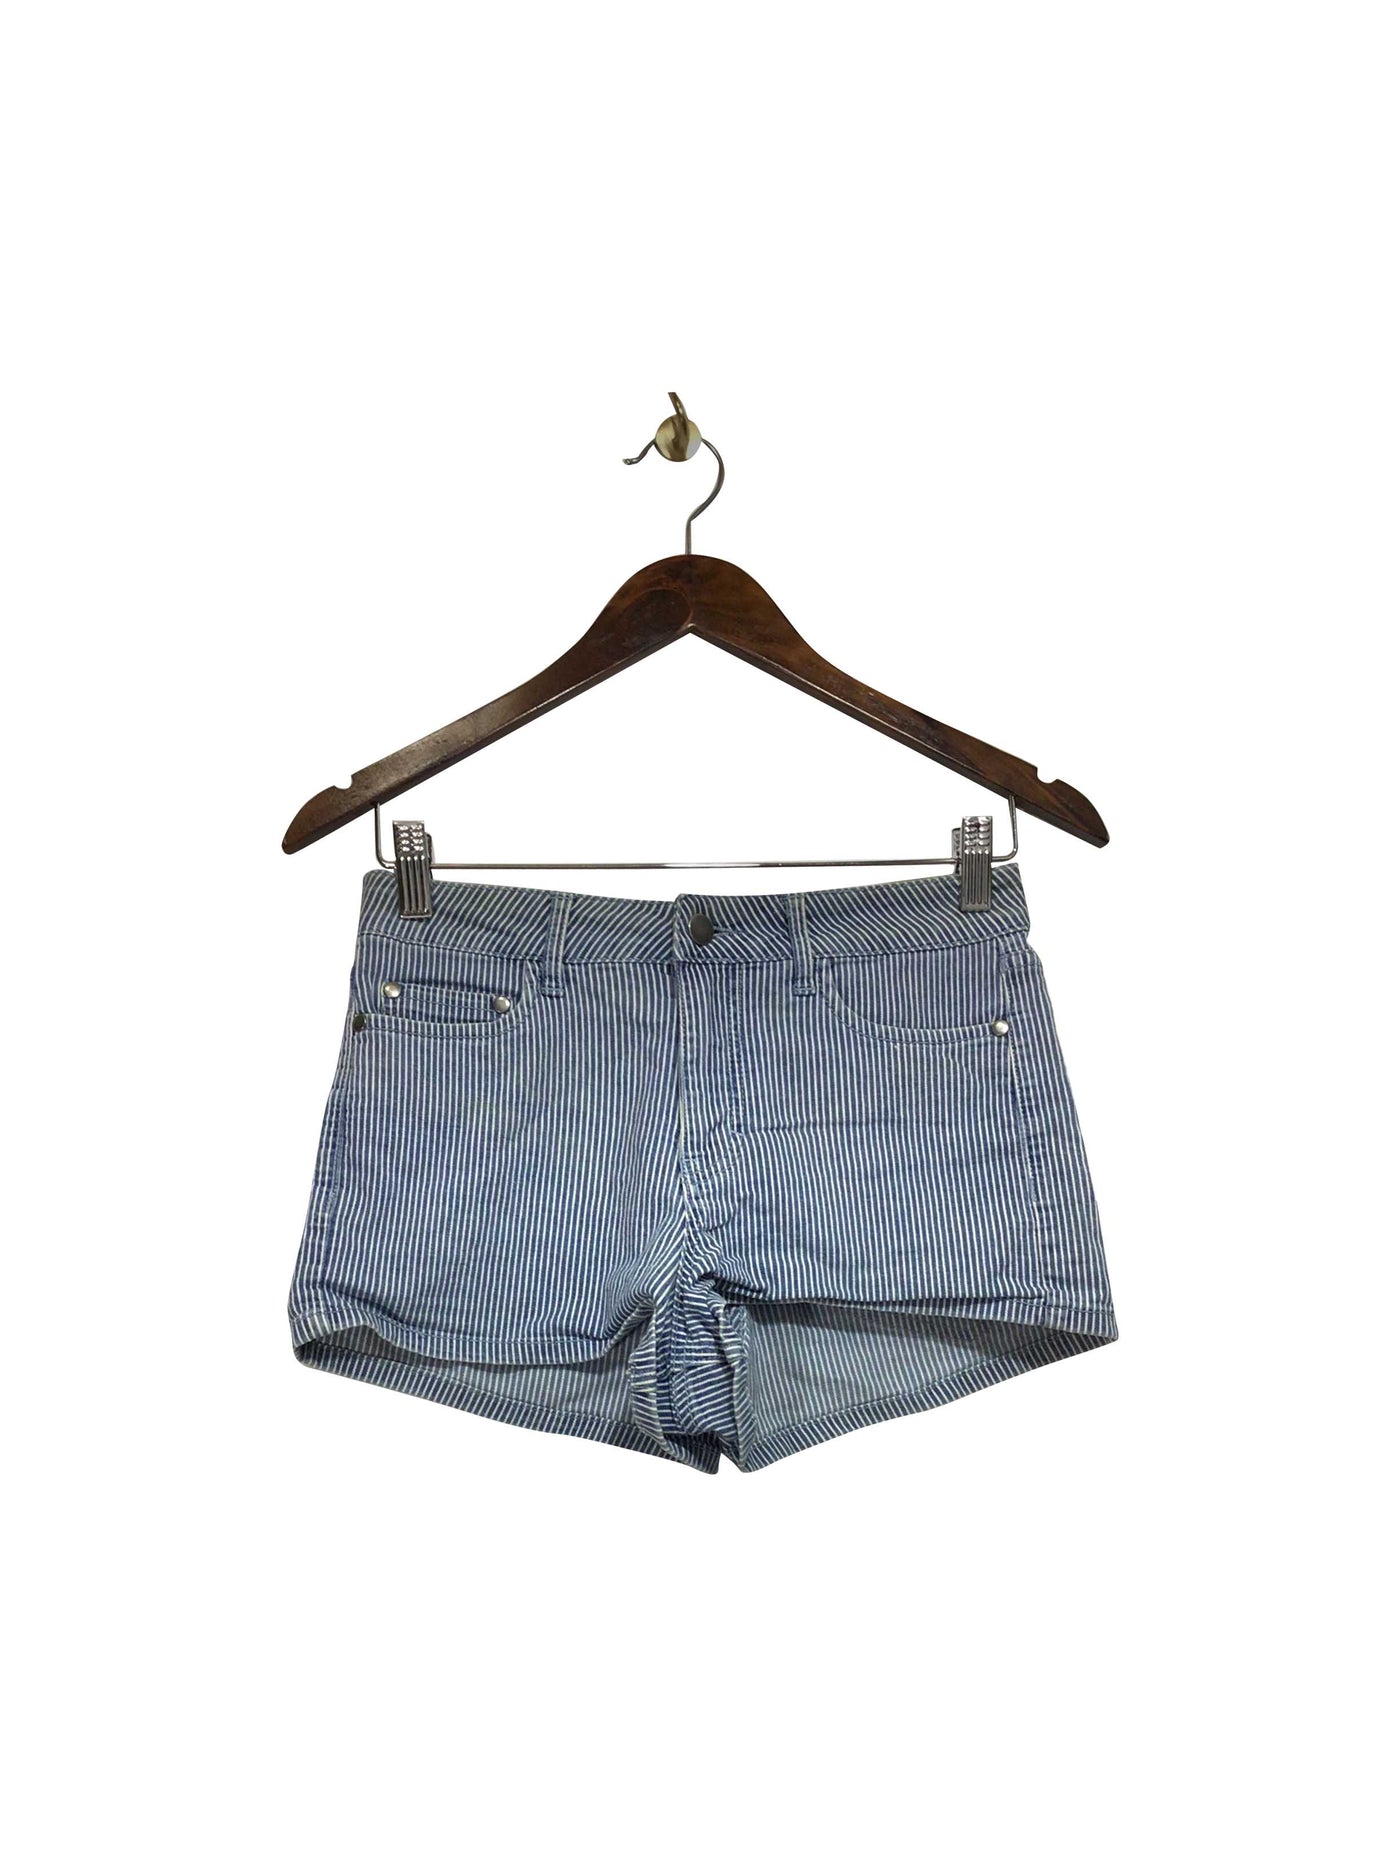 ABOUND Regular fit Pant Shorts in Blue  -  25  6.99 Koop